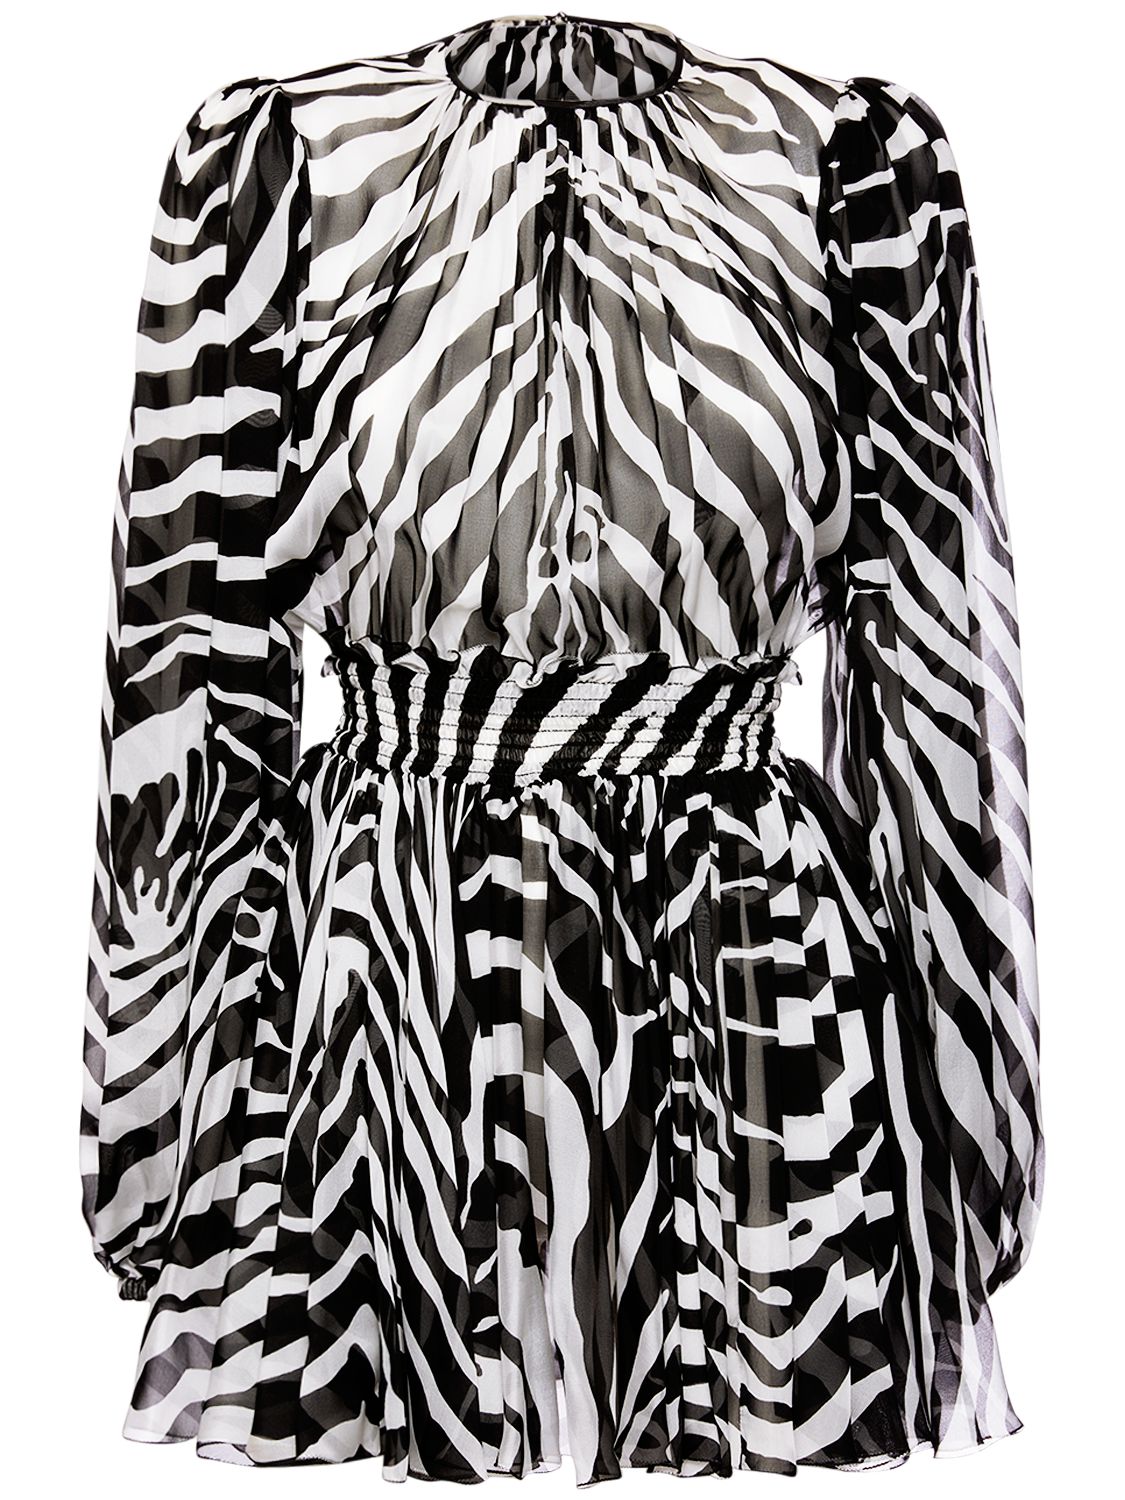 Dolce & Gabbana - Zebra printed silk chiffon mini dress - Multicolor